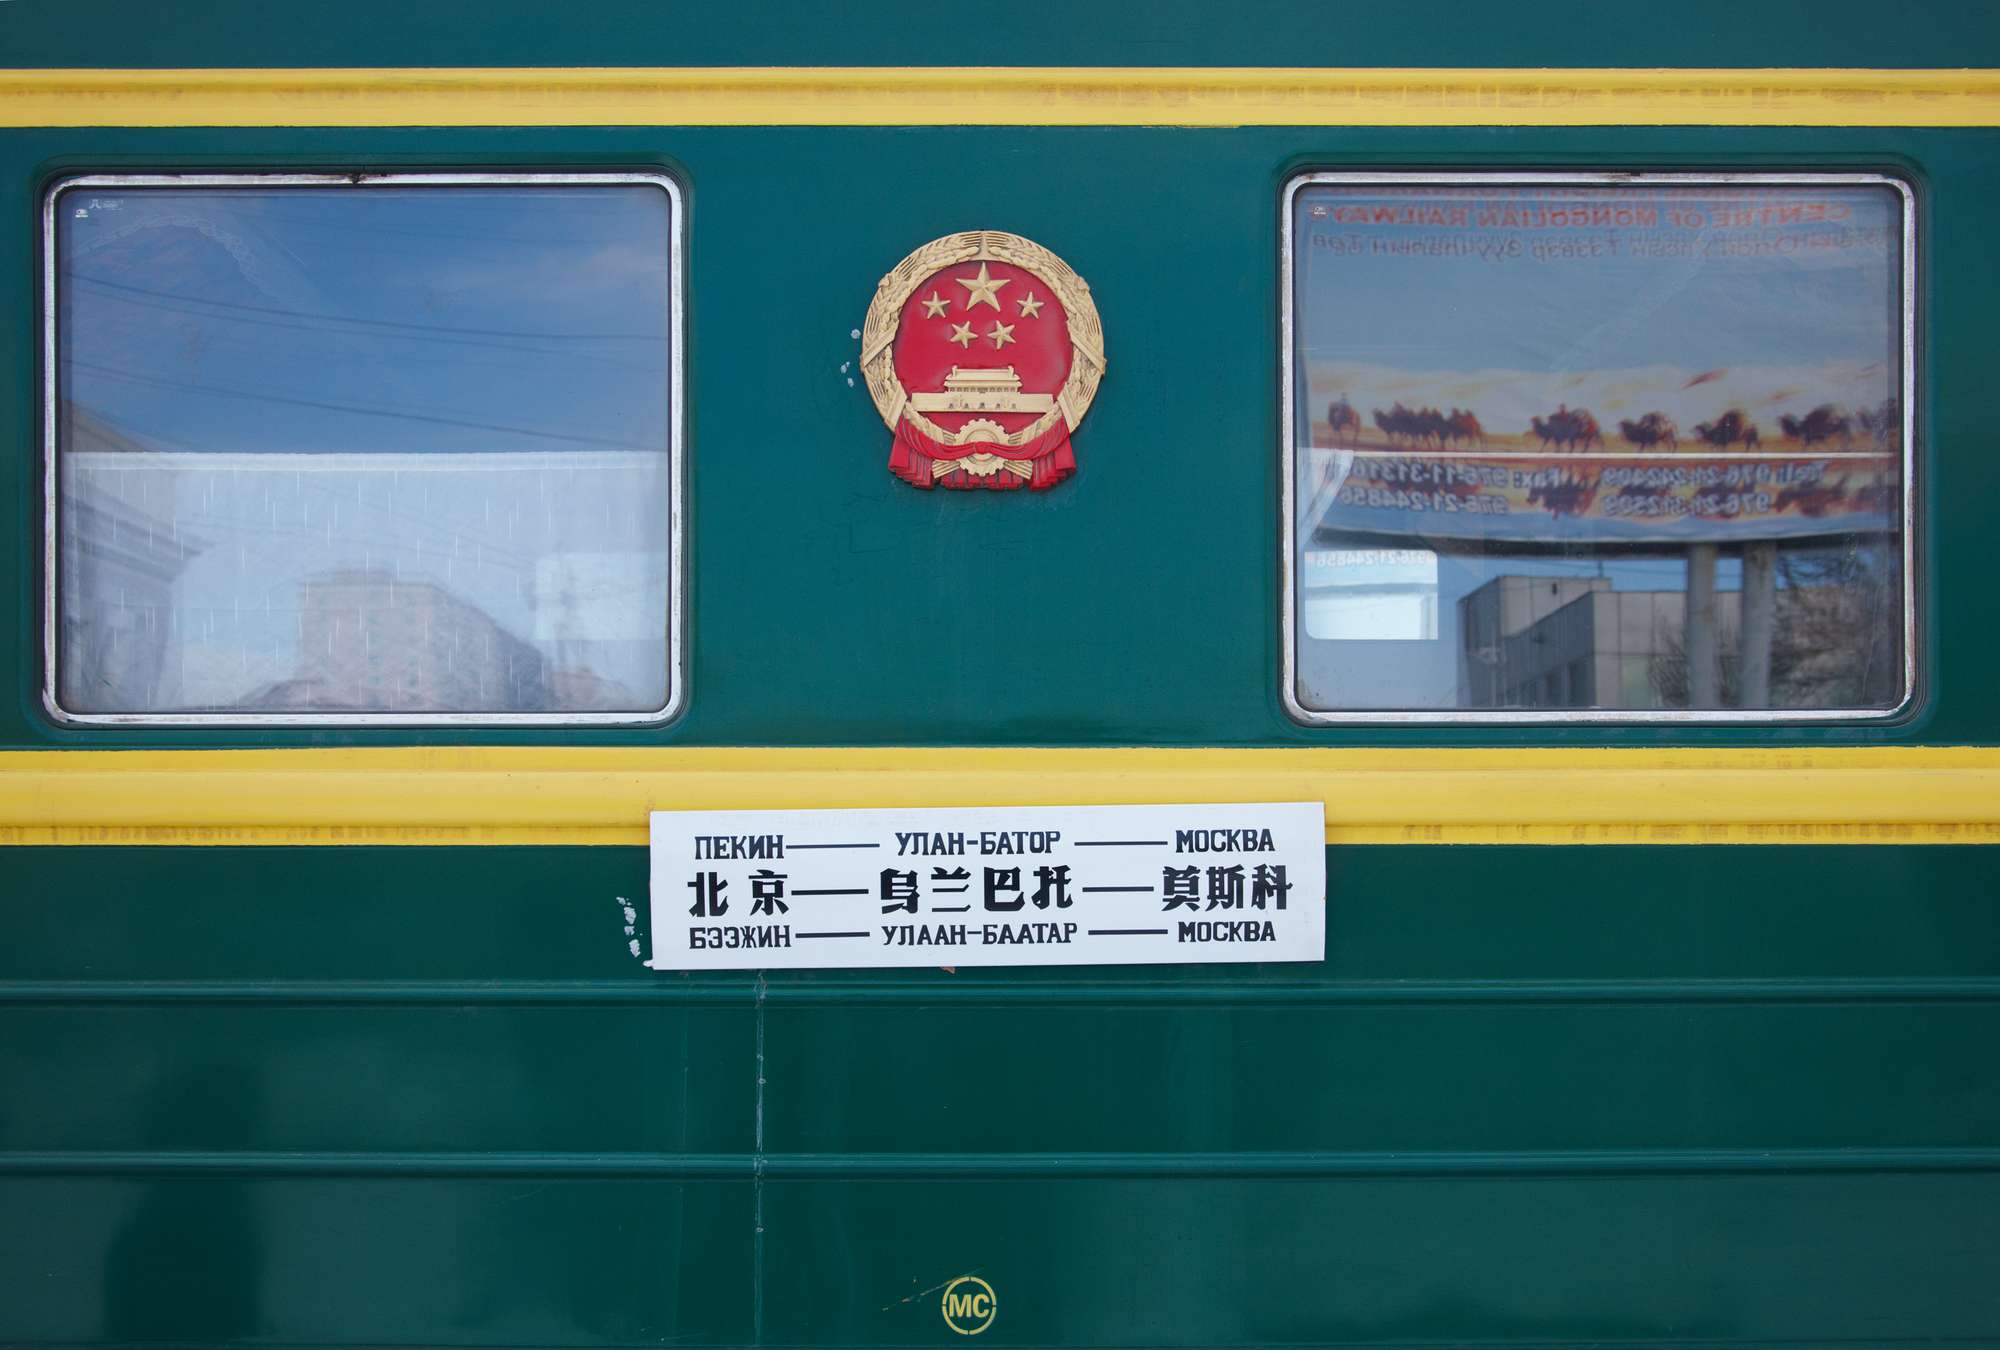             Wagon Green - Sfondo fotografico nostalgia ferroviaria
        